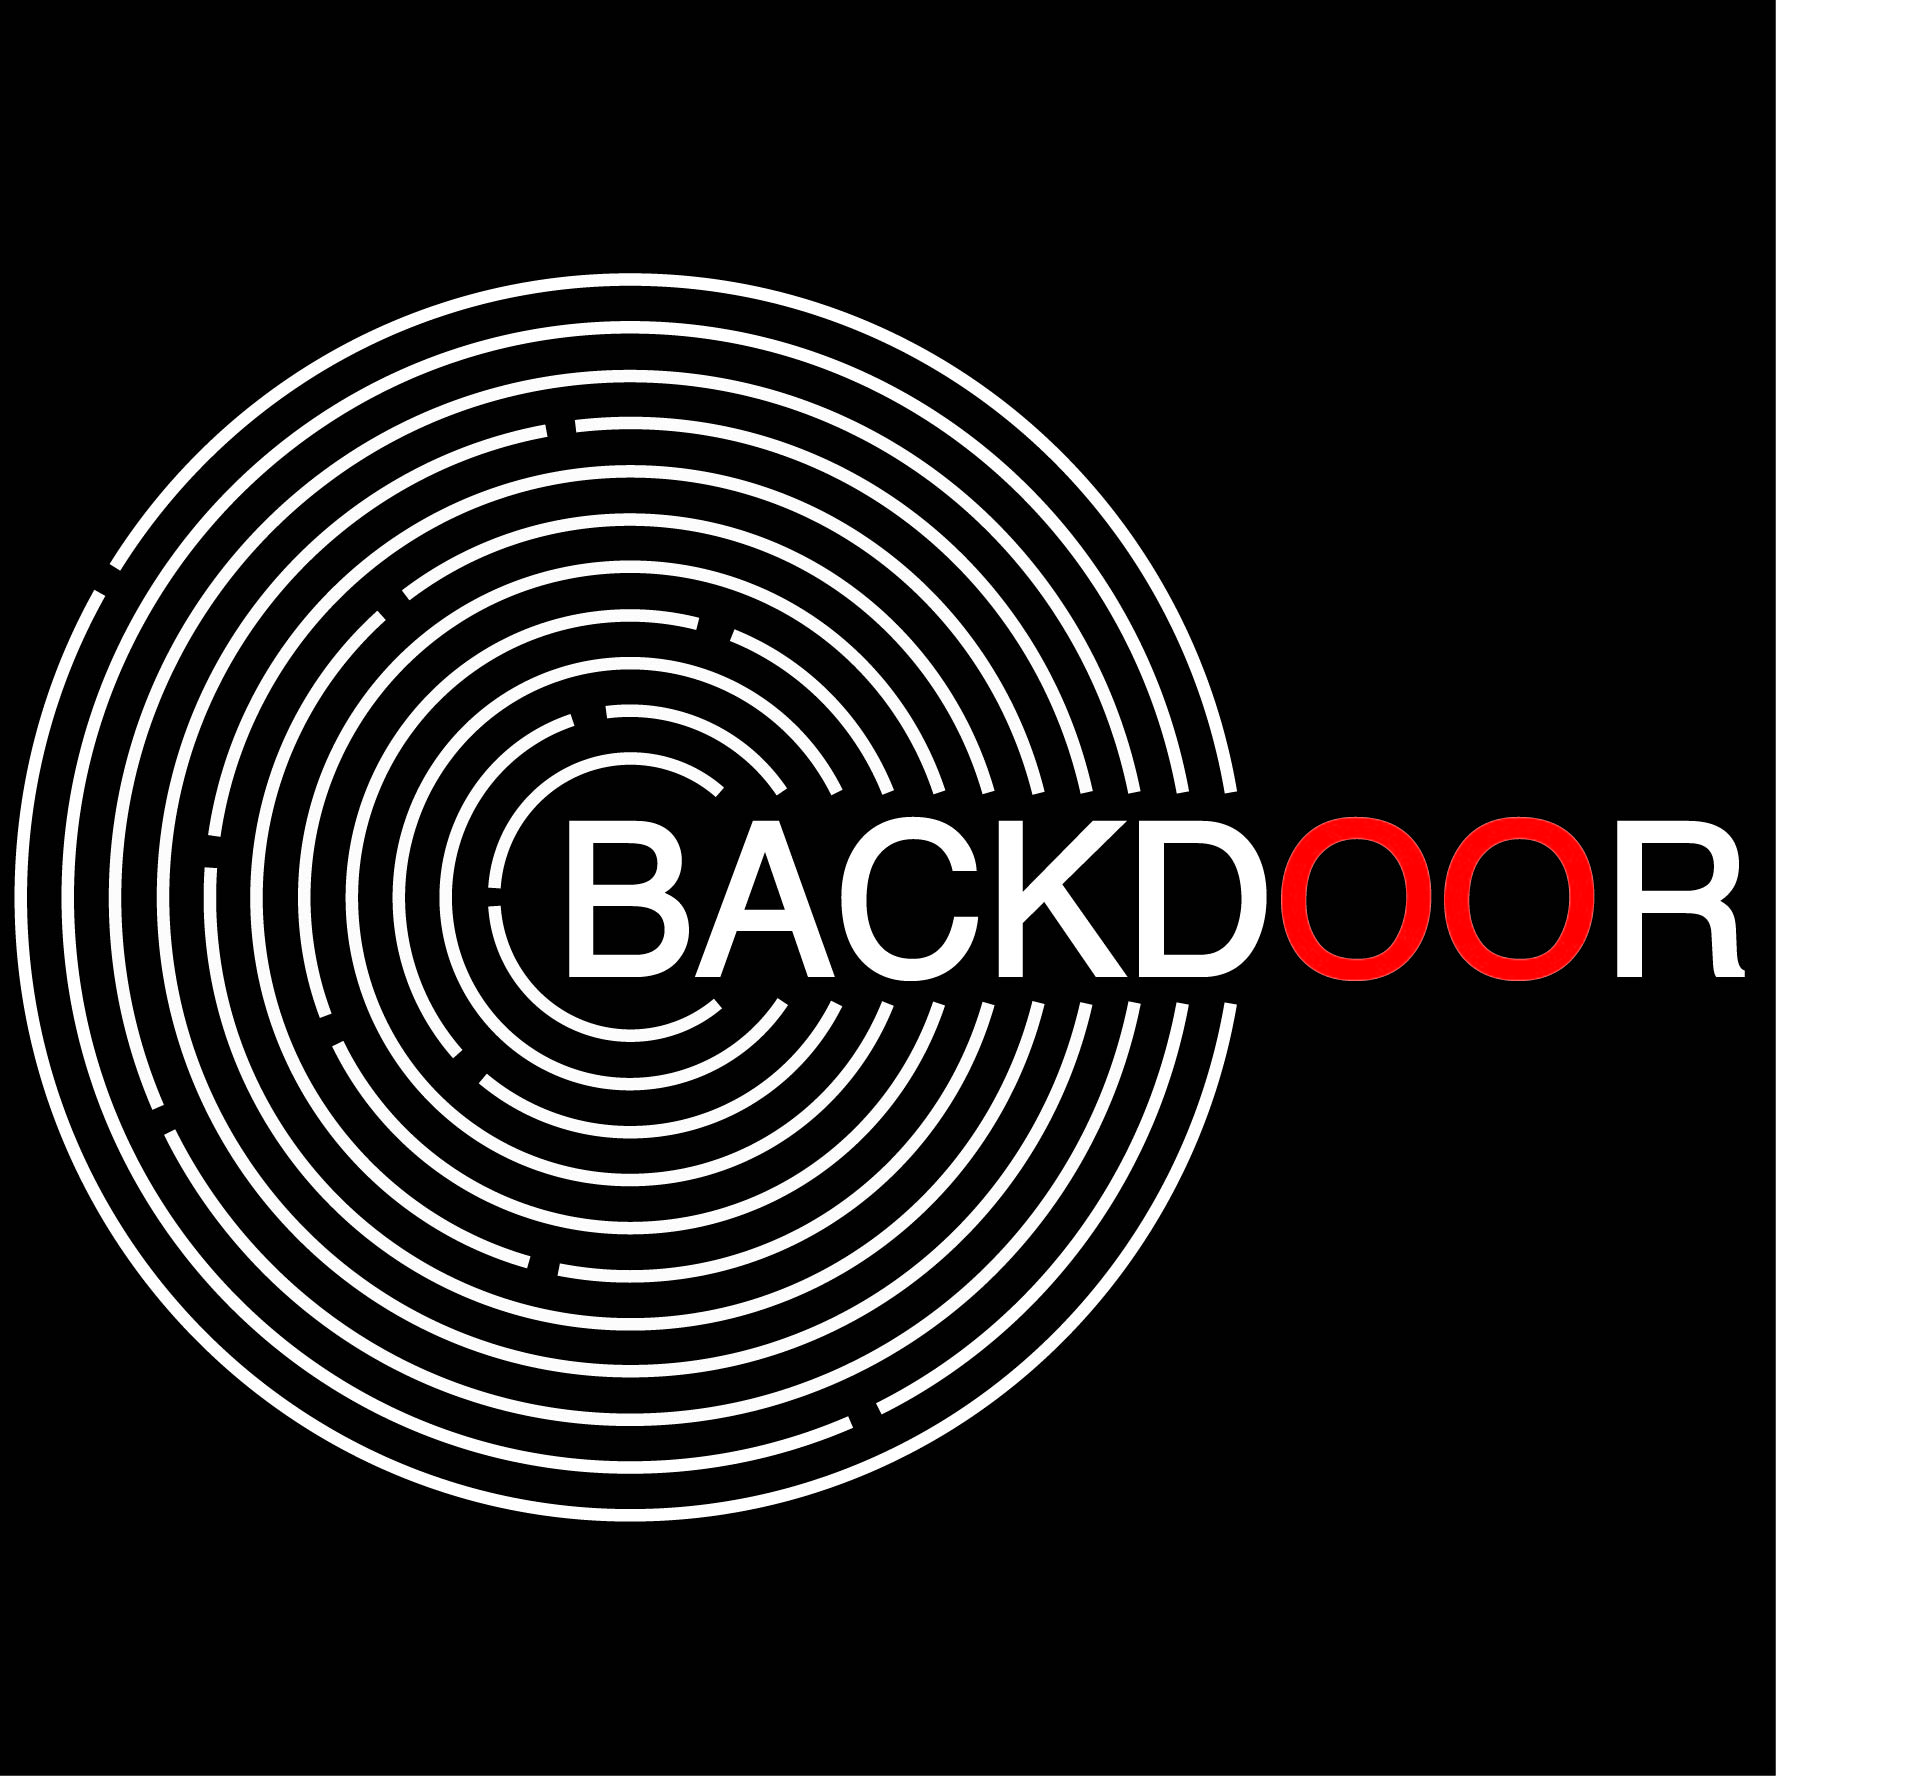 Backdoor Logos